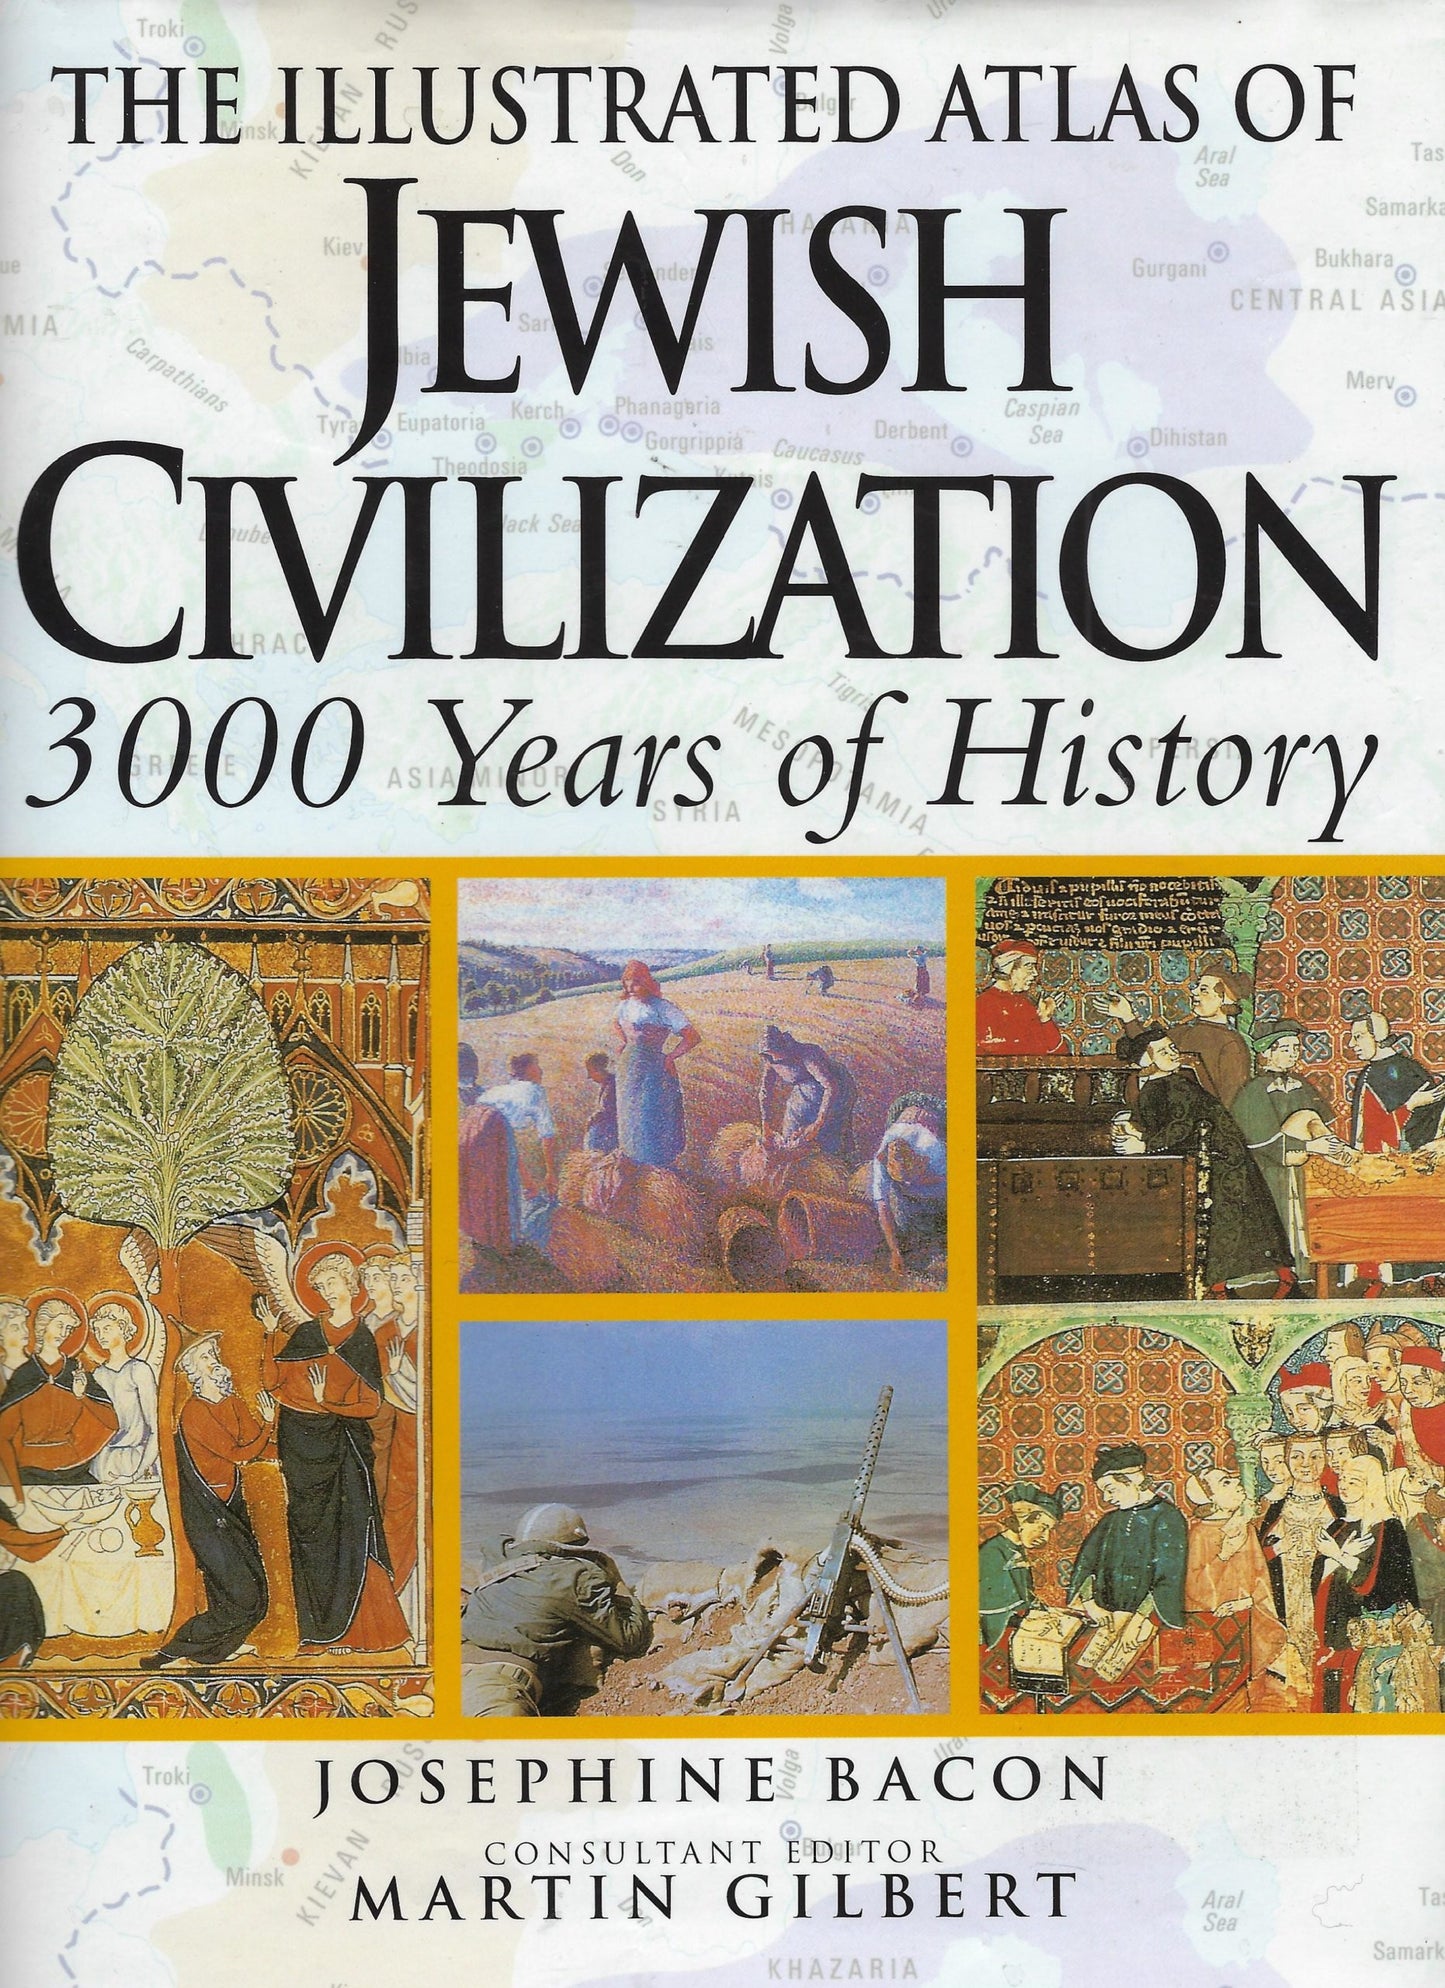 The illustrated atlas of Jewish civilization